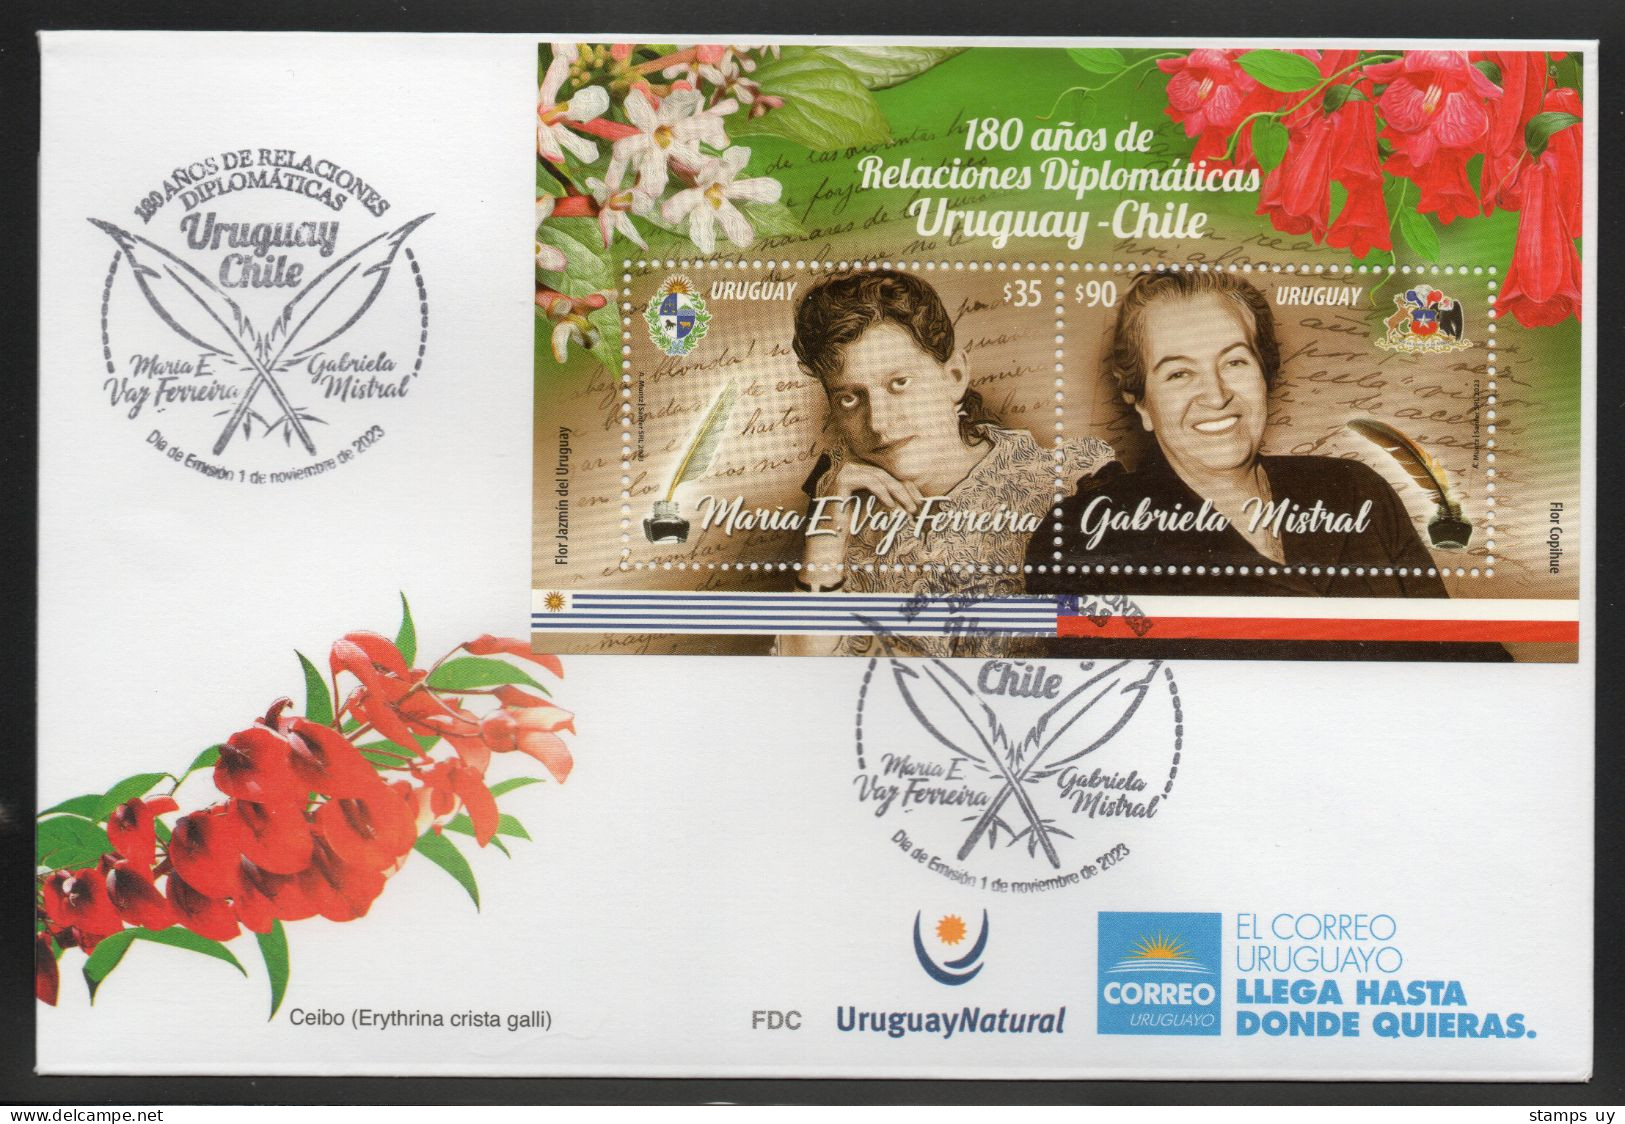 URUGUAY 2023 (Diplomacy, Chile, Poets, M E Vaz Ferreira, Gabriela Mistral, Nobel Prize, Literature, Flowers) - 1 FDC - Postzegels